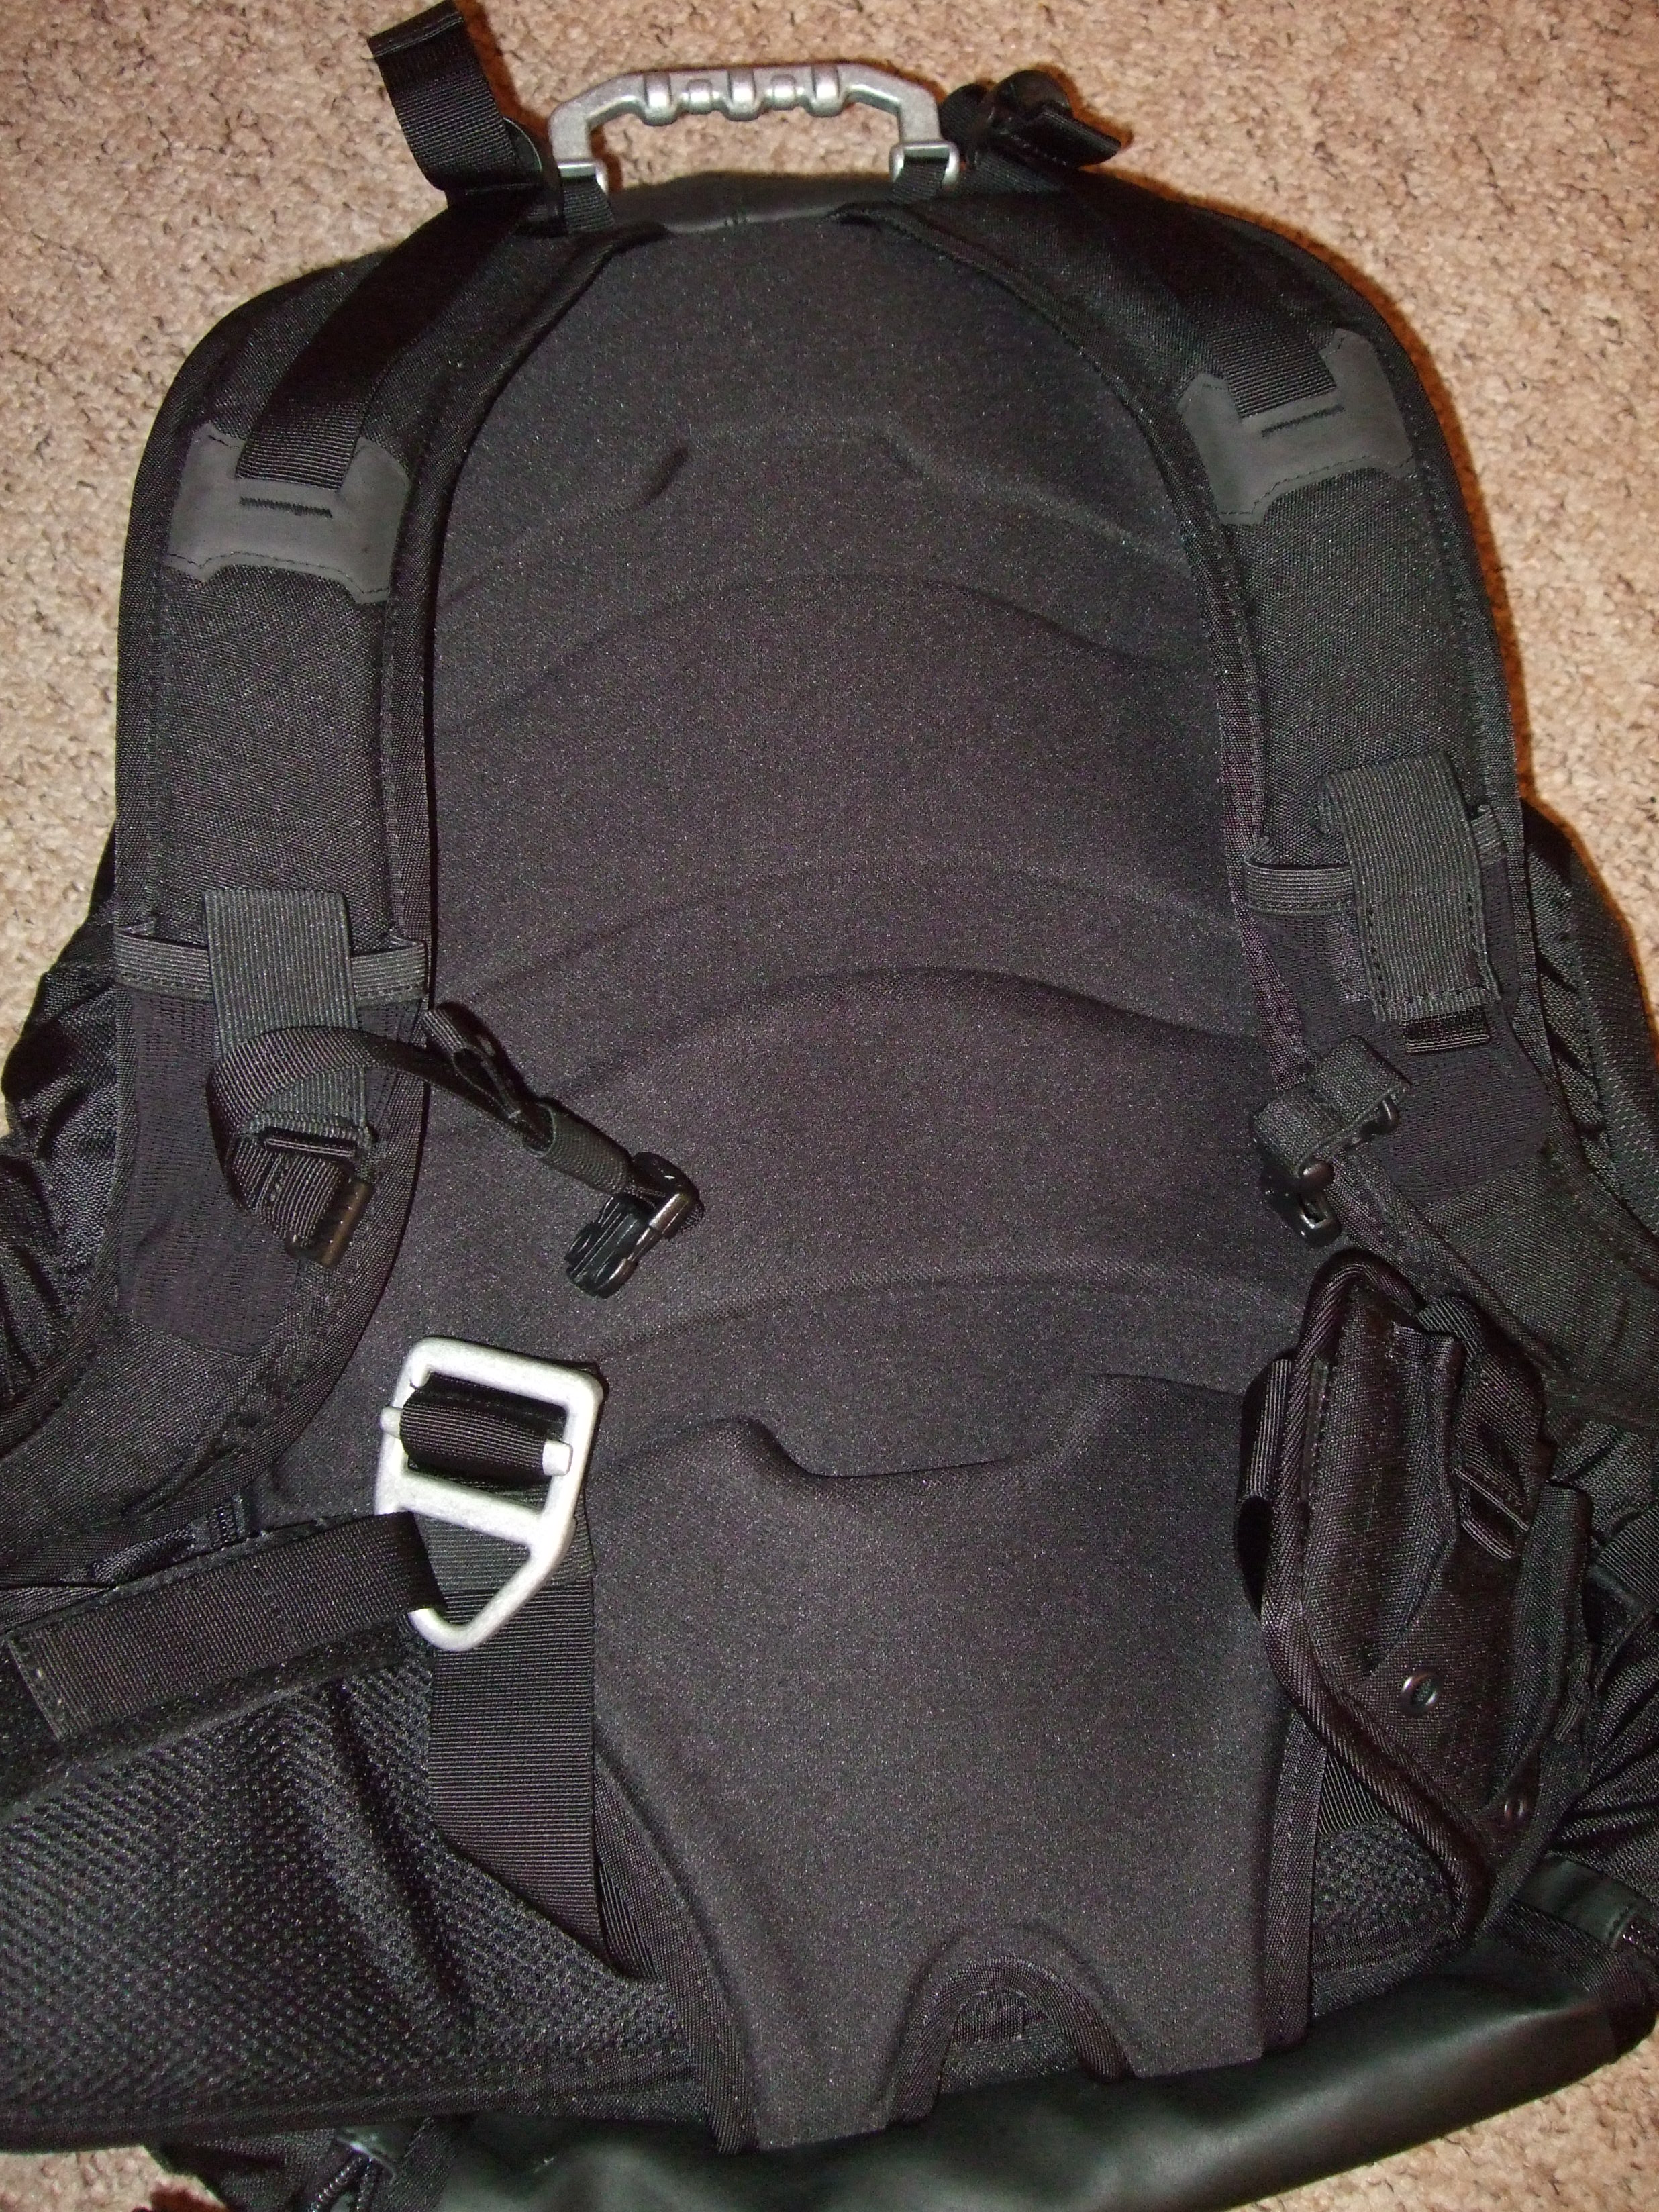 oakley kitchen sink backpack review